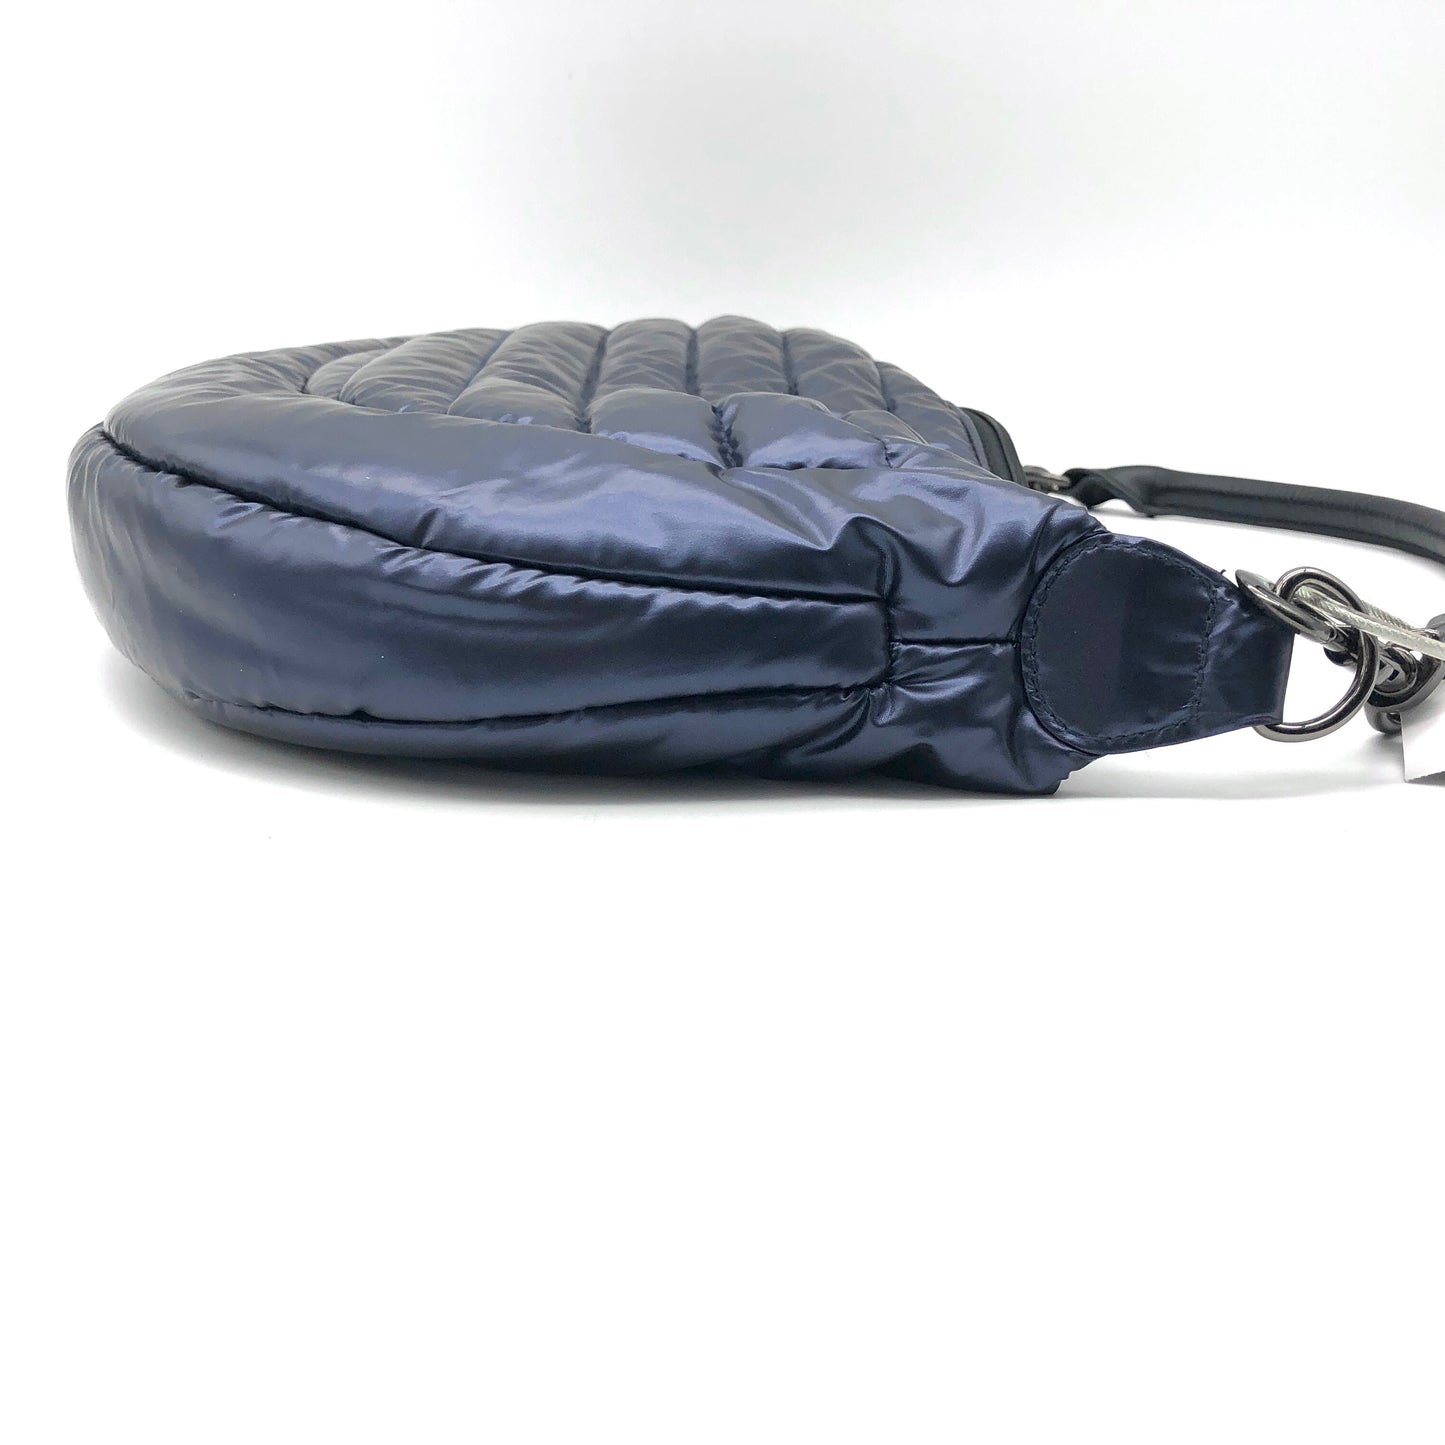 Handbag By Think Royln  Size: Medium